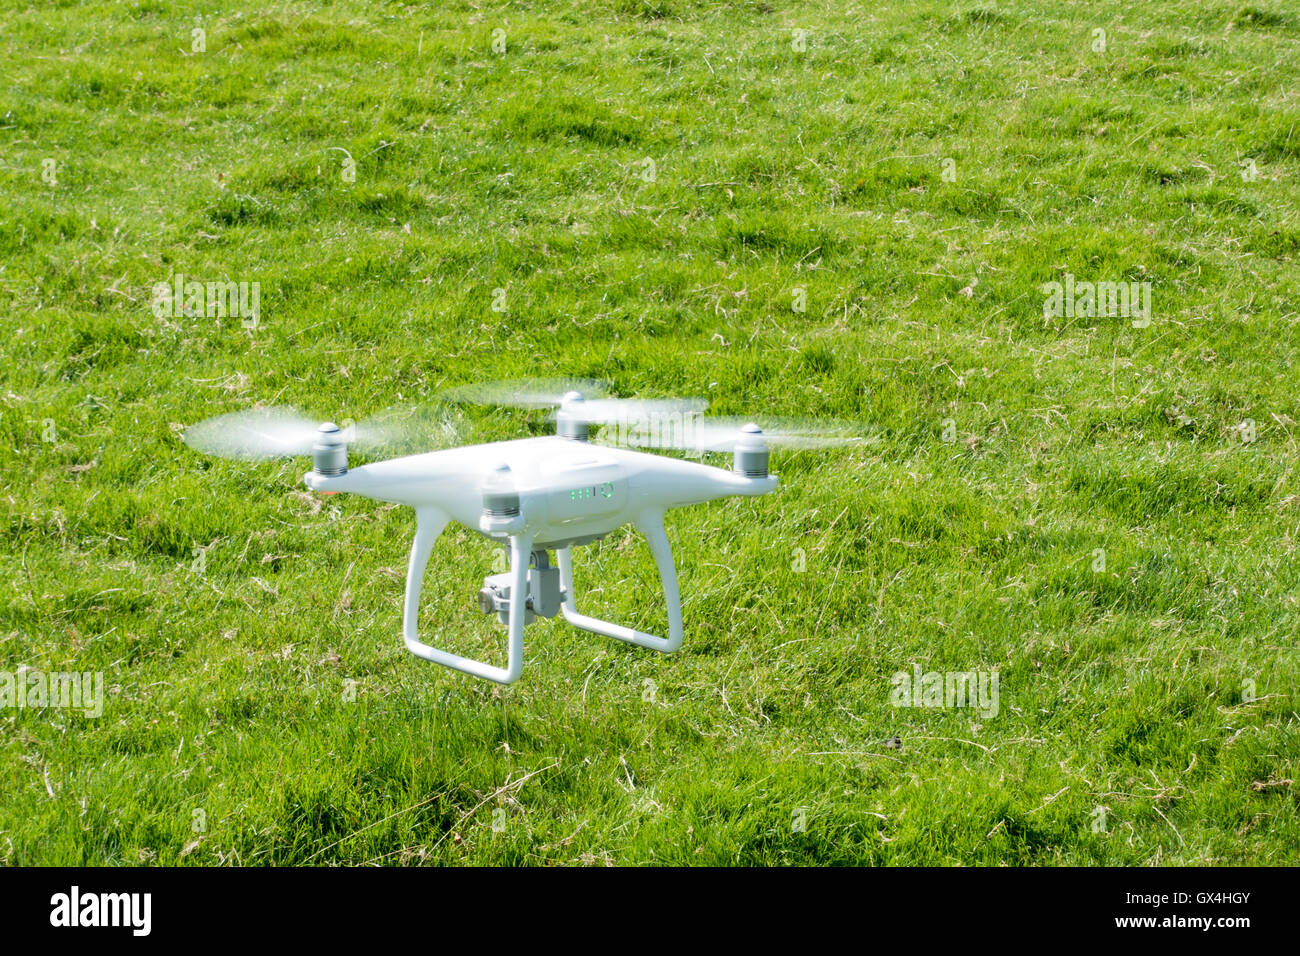 DJI Phantom 4 UAV Drone in flight Stock Photo